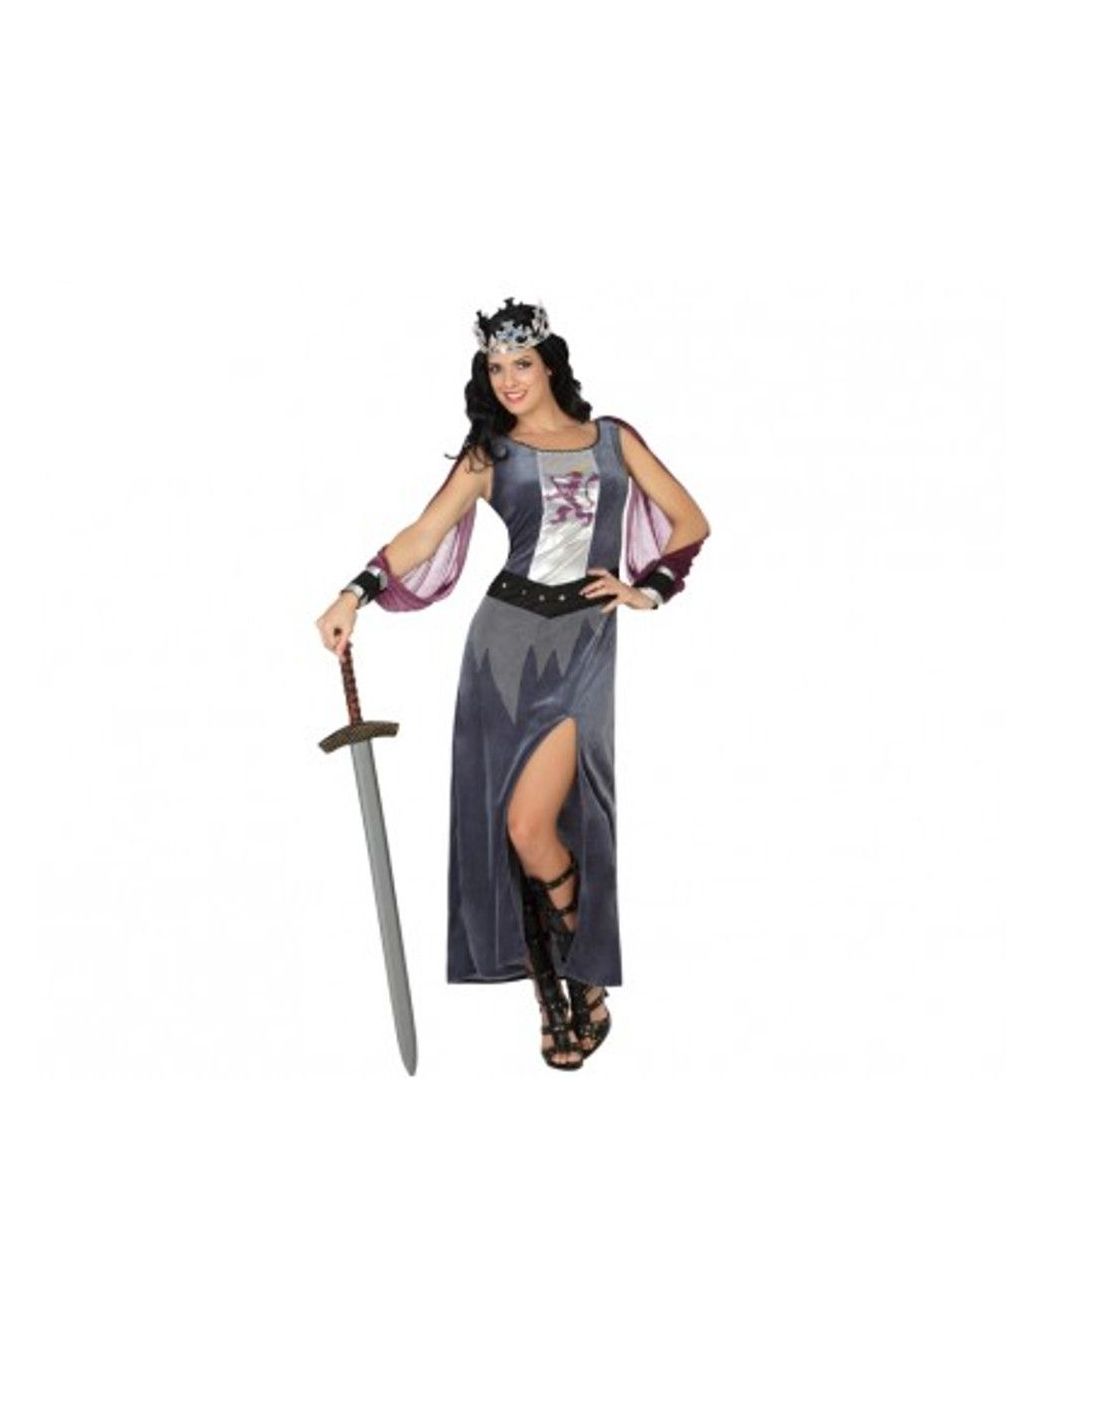 https://www.mercadisfraces.es/20291-thickbox_default/disfraz-soldado-medieval-para-mujer.jpg